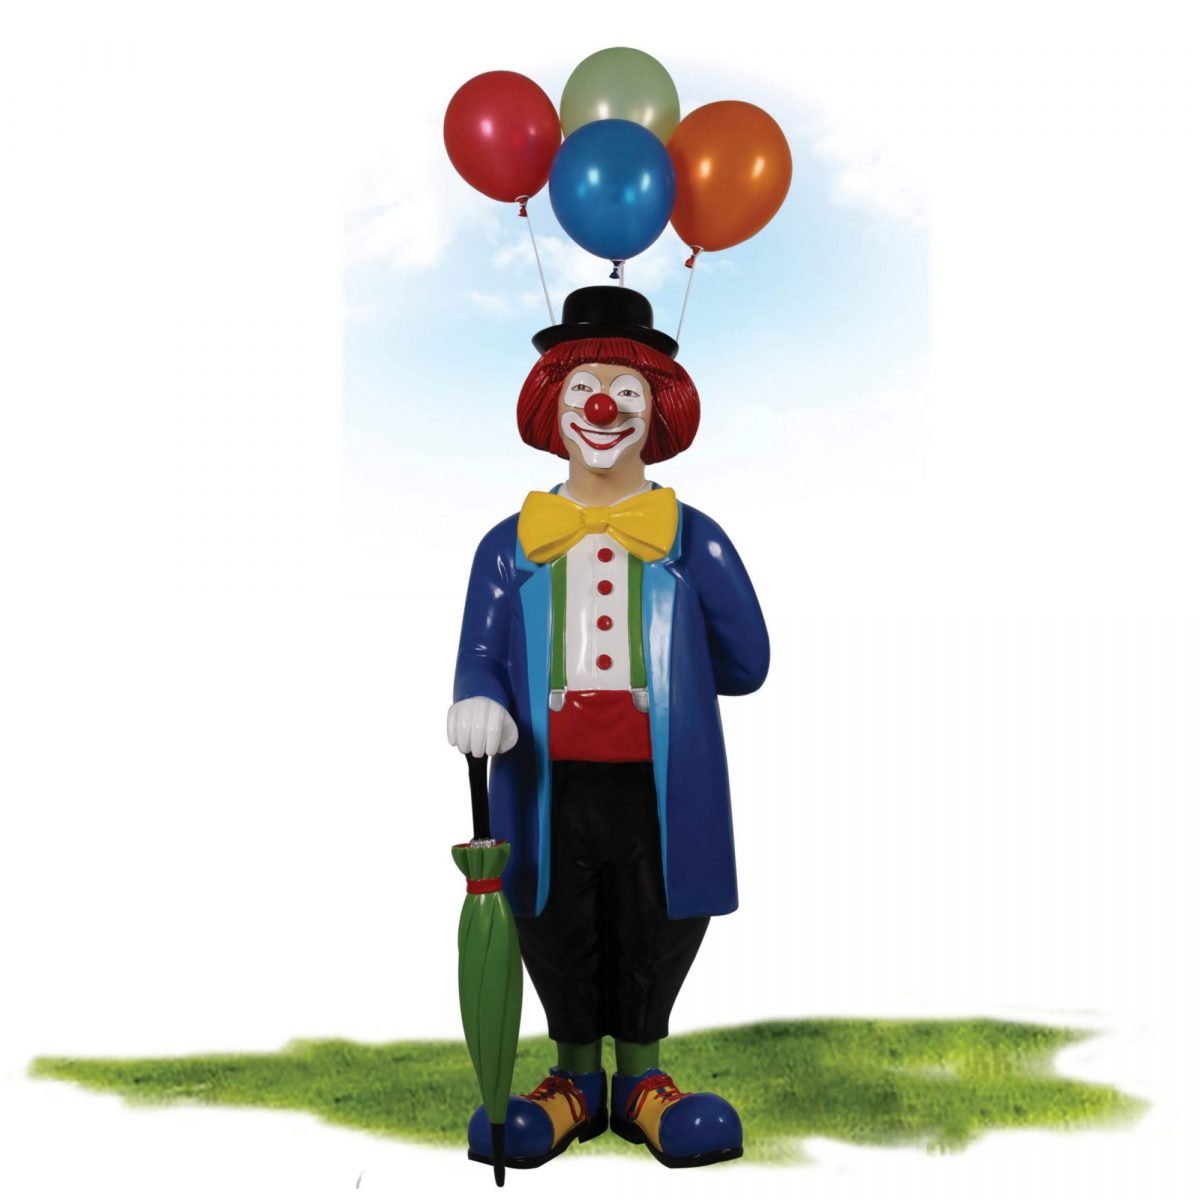 Clown With Umbrella & Balloons Sculptures In Australia